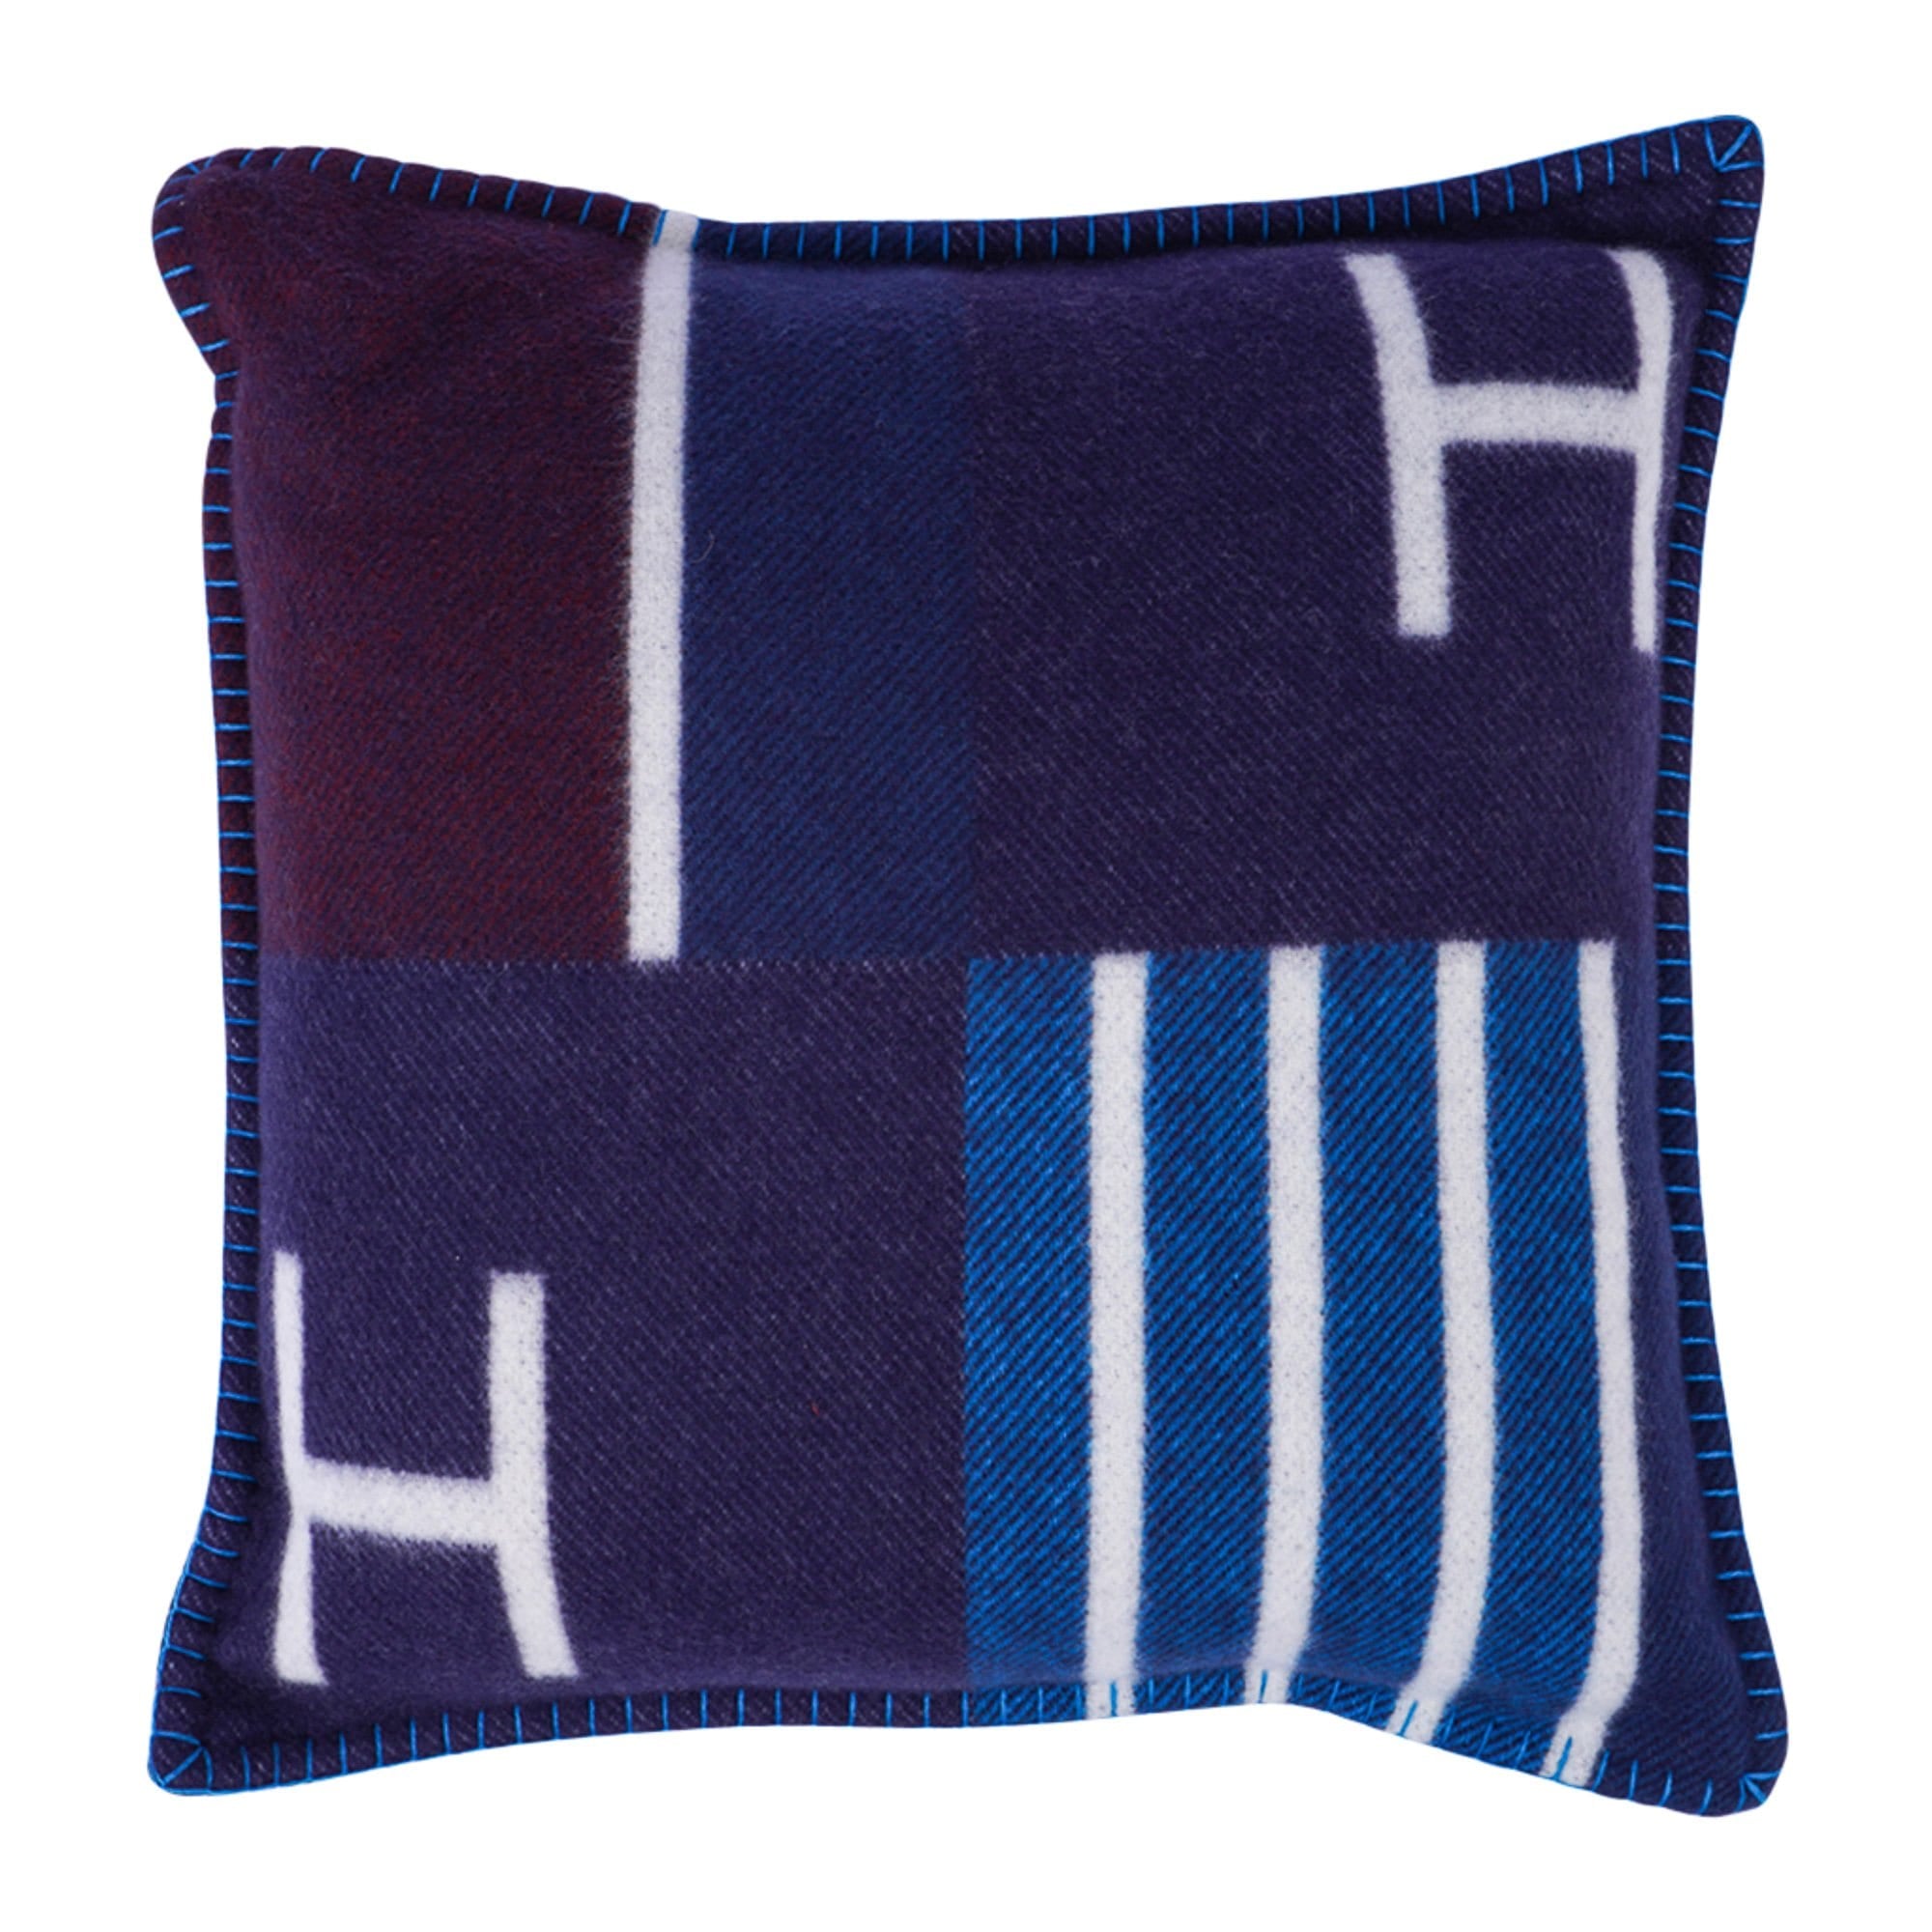 Hermes Cushion Avalon Vibration Blue Marine Small Model Throw Pillow Set of Two